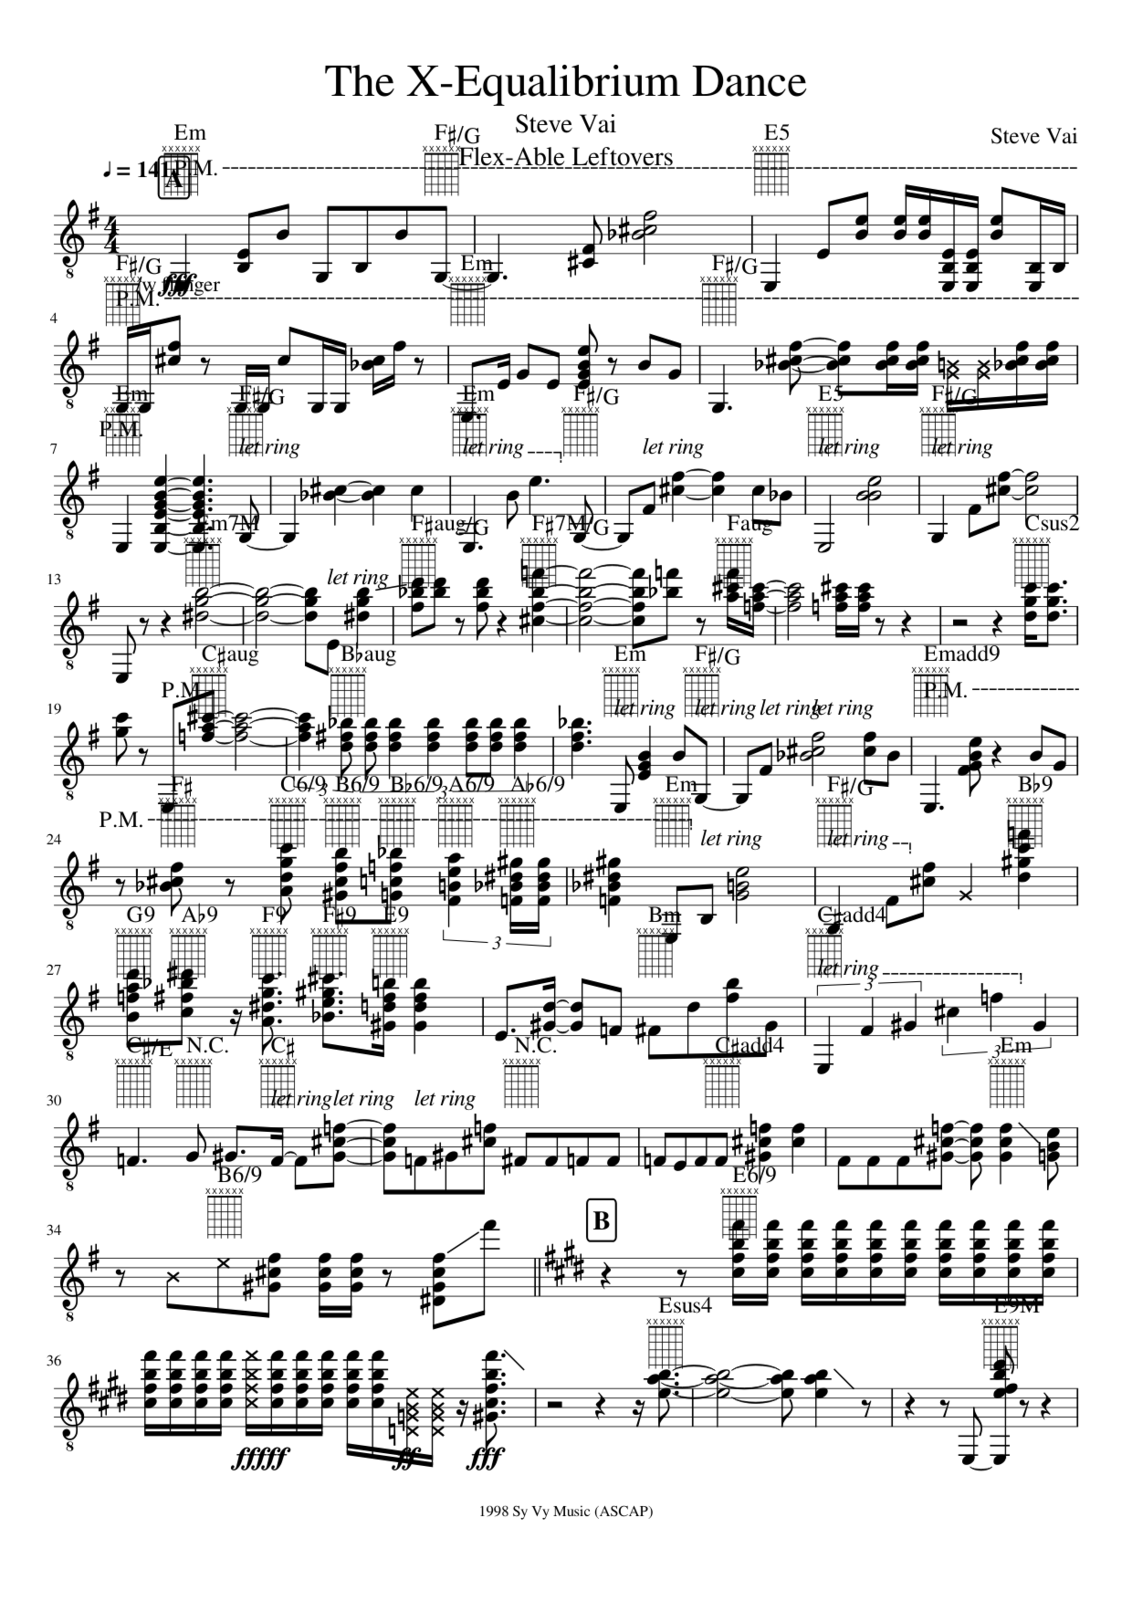 The X-equalibrium Dance slide, Image 1